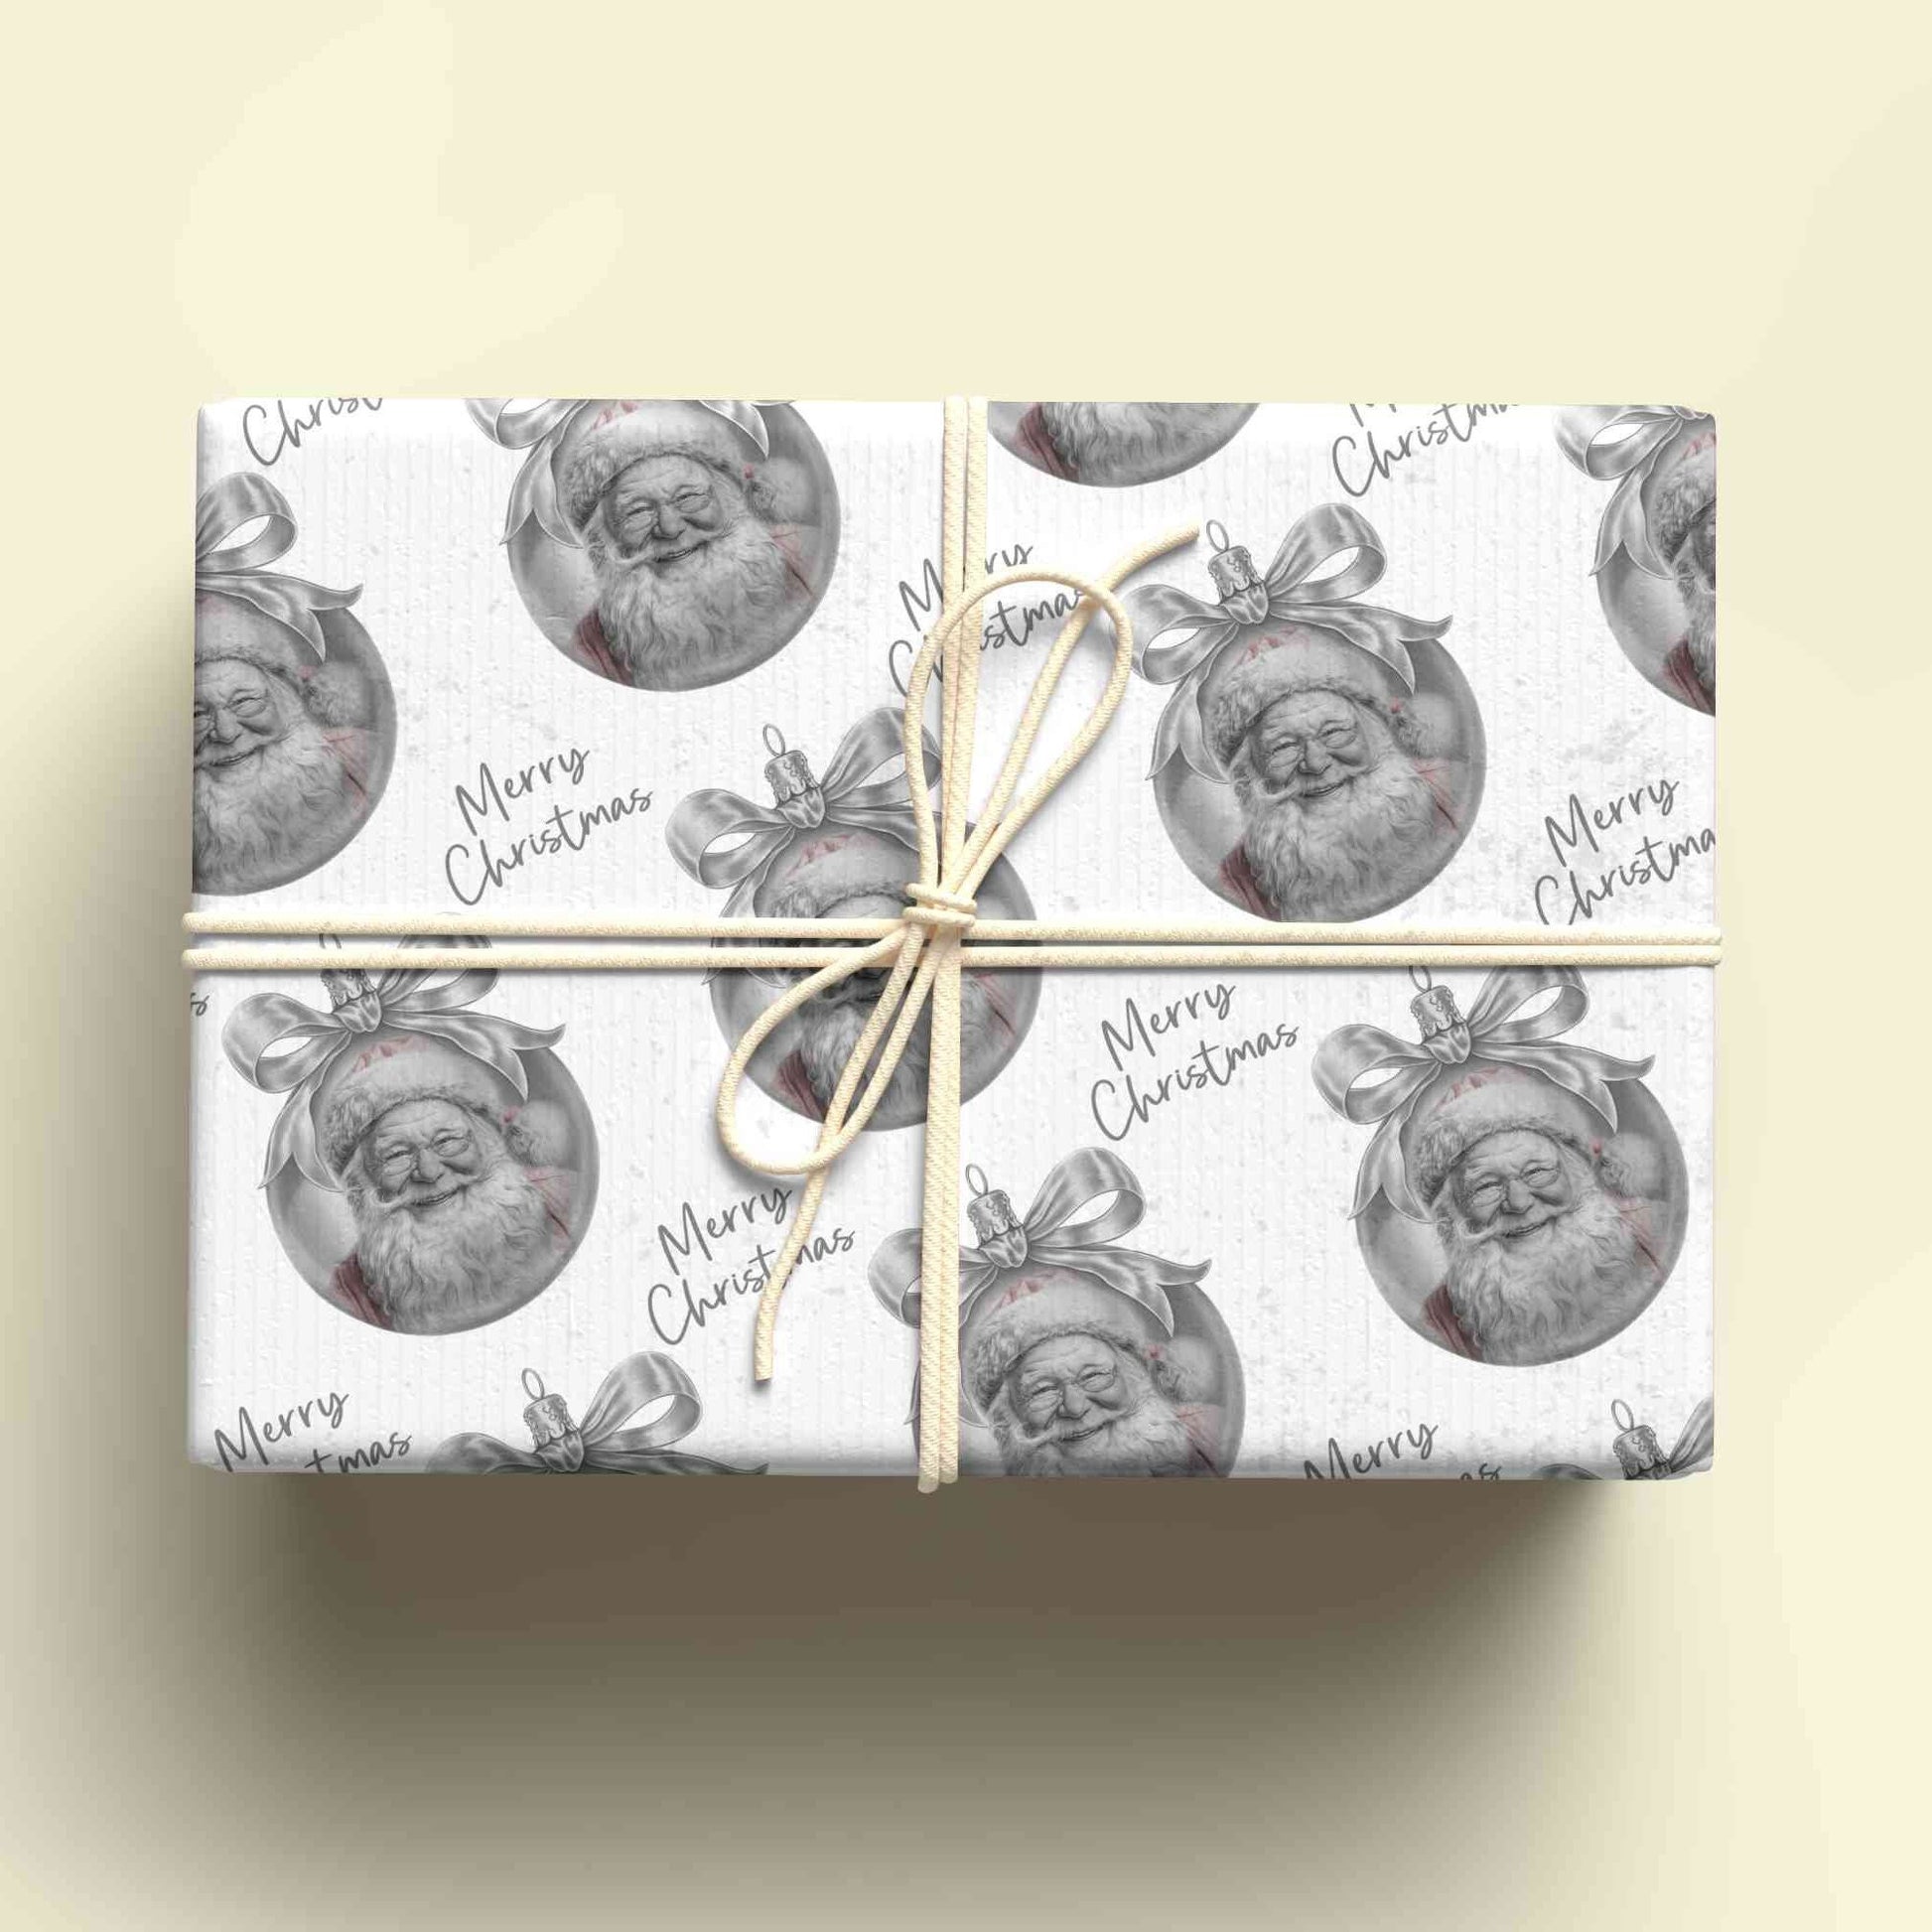 Personalised Christmas Jolly Santa Wrapping Paper - Custom Name Gift Wrap - Santa Design - Unique Xmas Gift Wrap - UK Seller